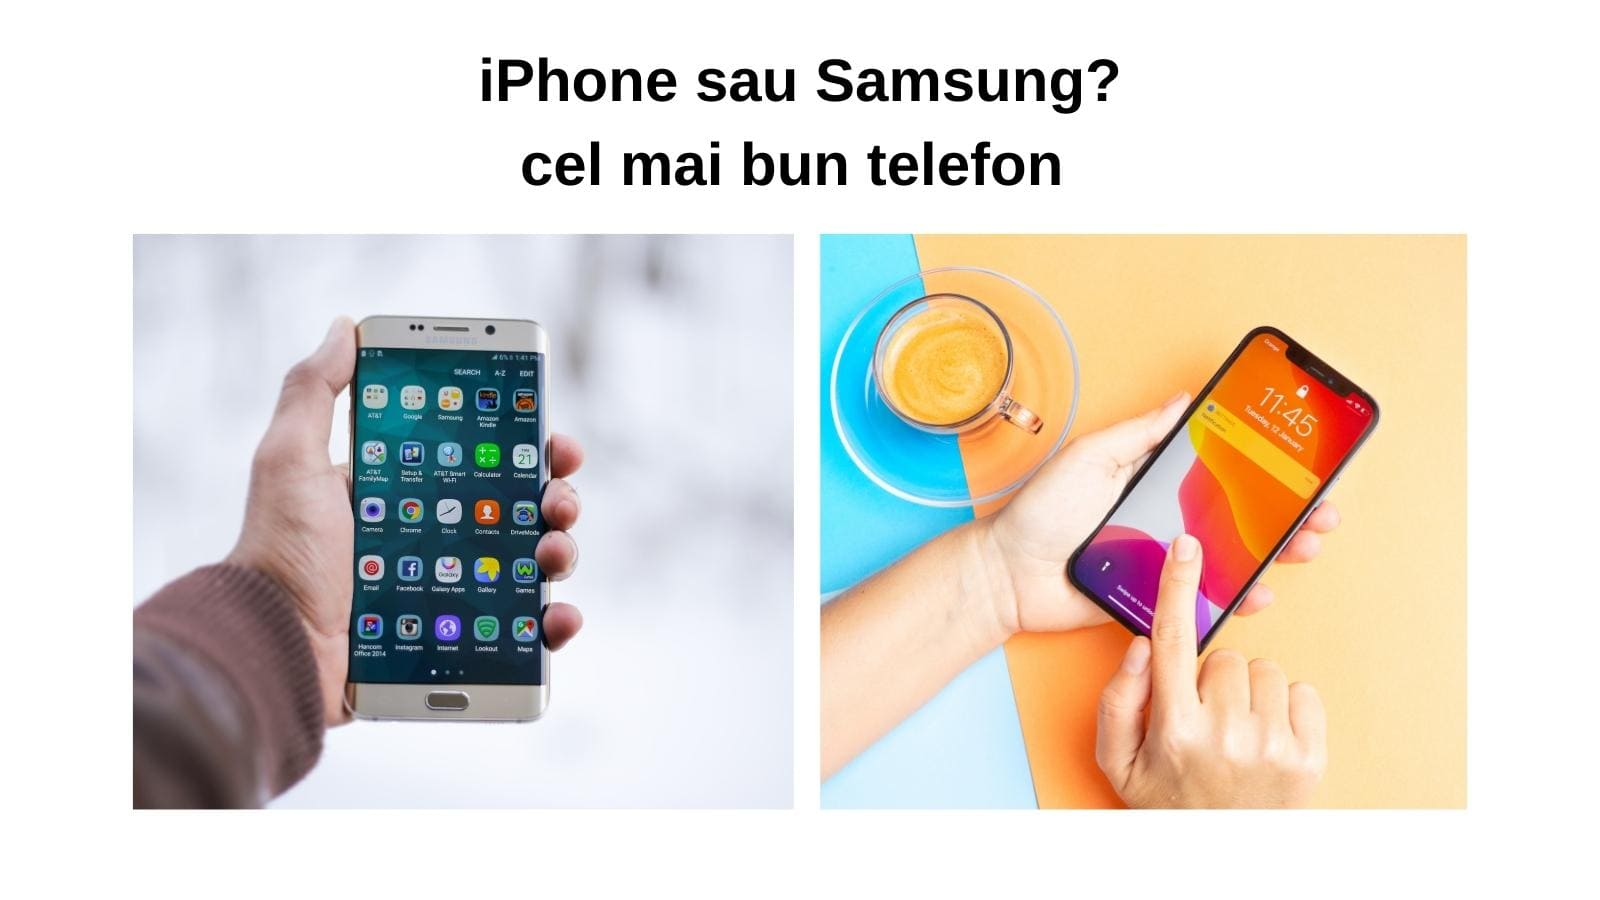 cel mai bun telefon iPhone sau Samsung